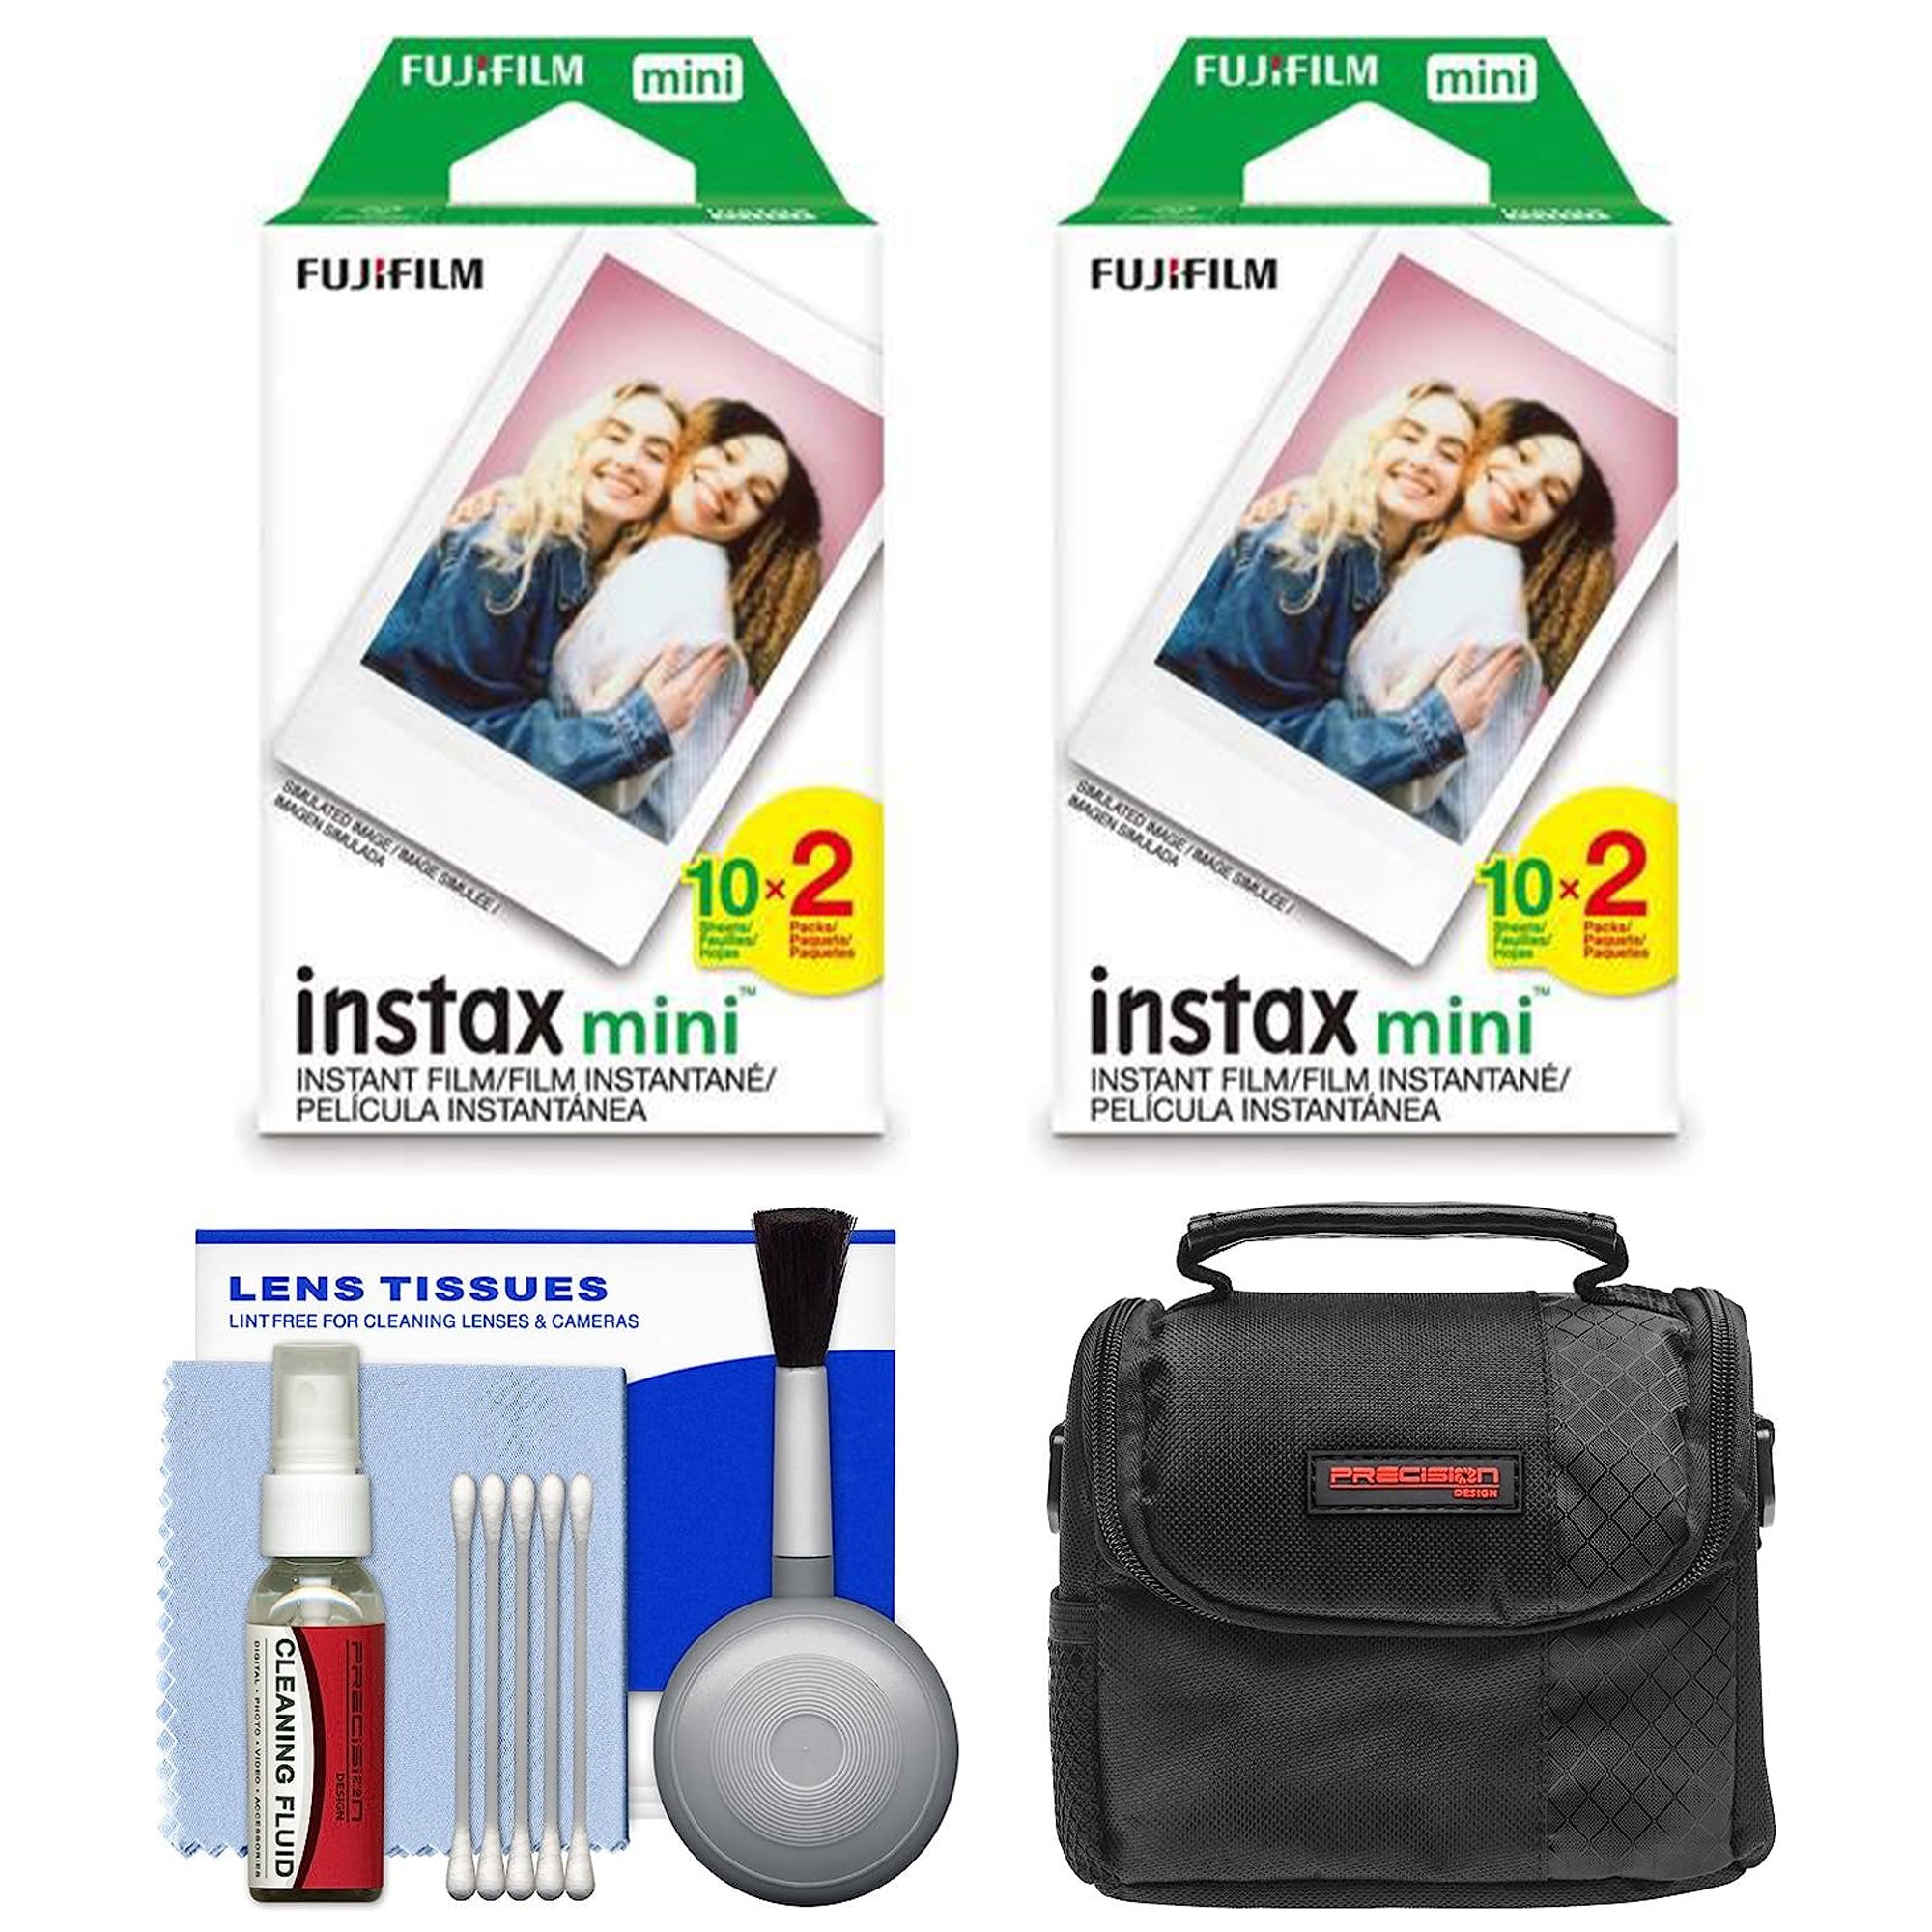 Essentials Bundle for Fujifilm Instax Mini Film Camera with 40 Color Prints